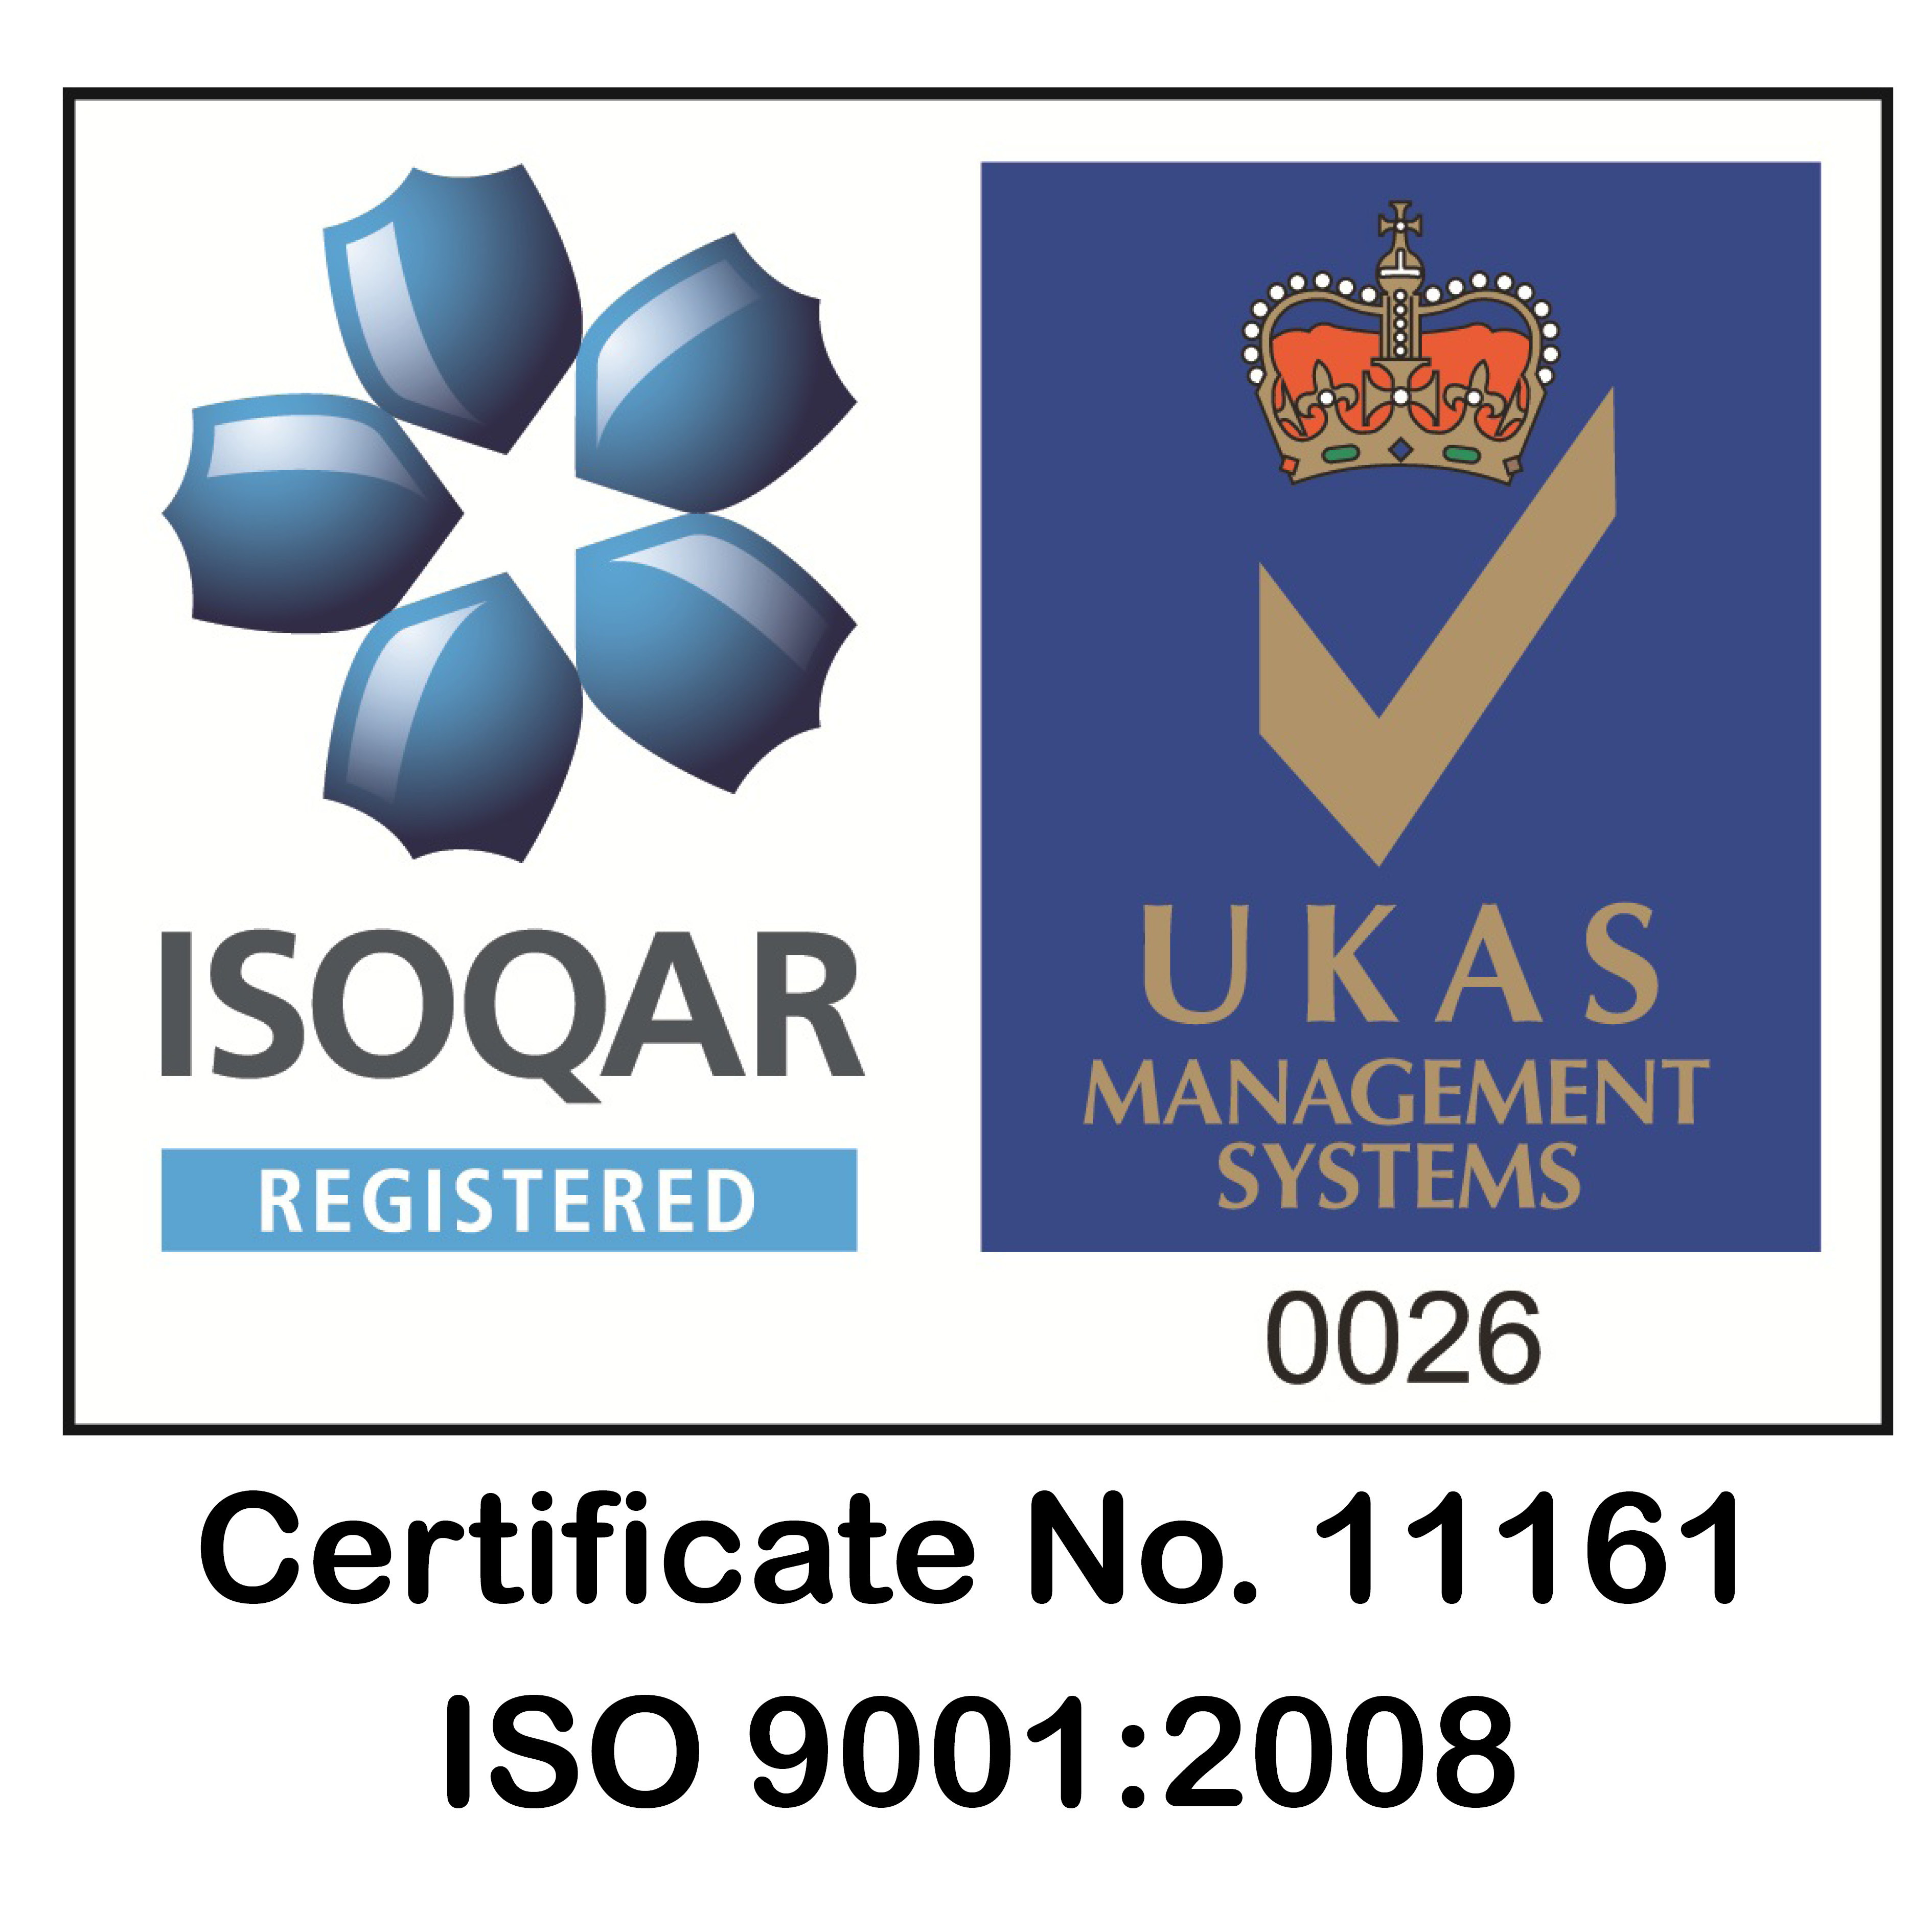 UKAS ISOQAR LOGO 9001